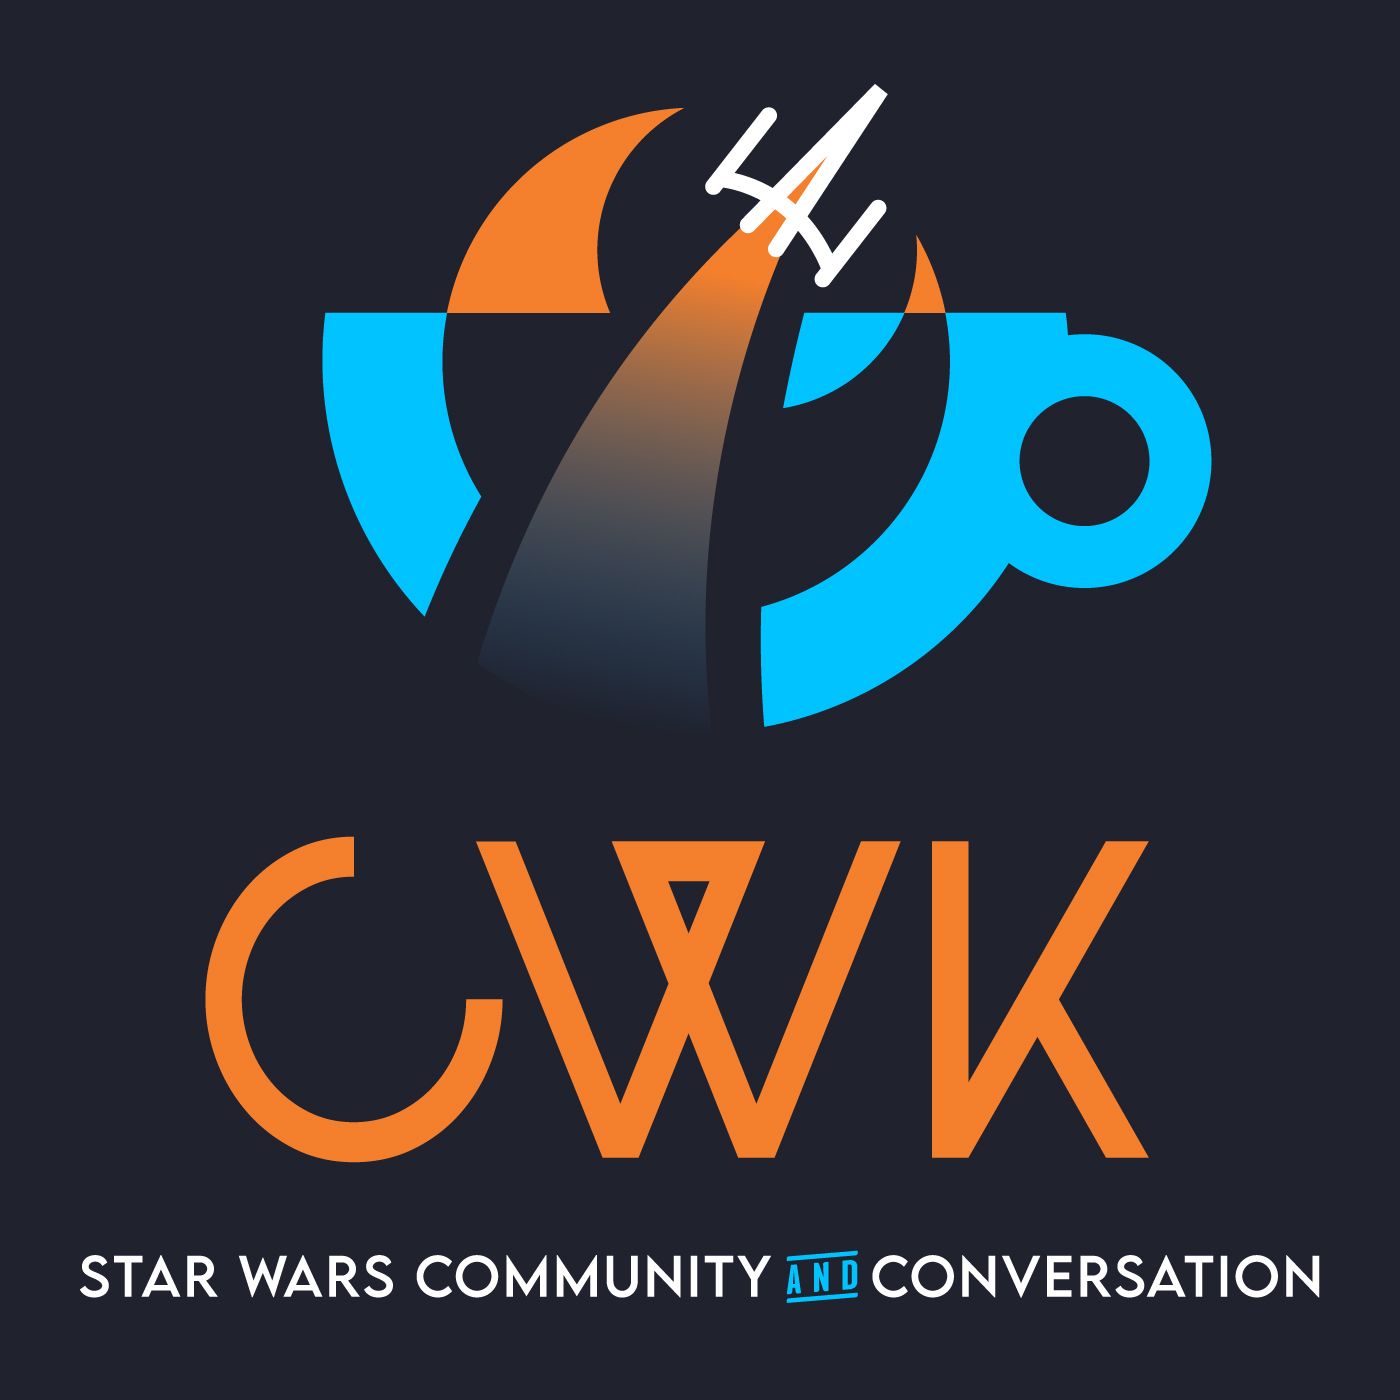 Coffee With Kenobi: Star Wars Discussion, Analysis, and Rhetoric